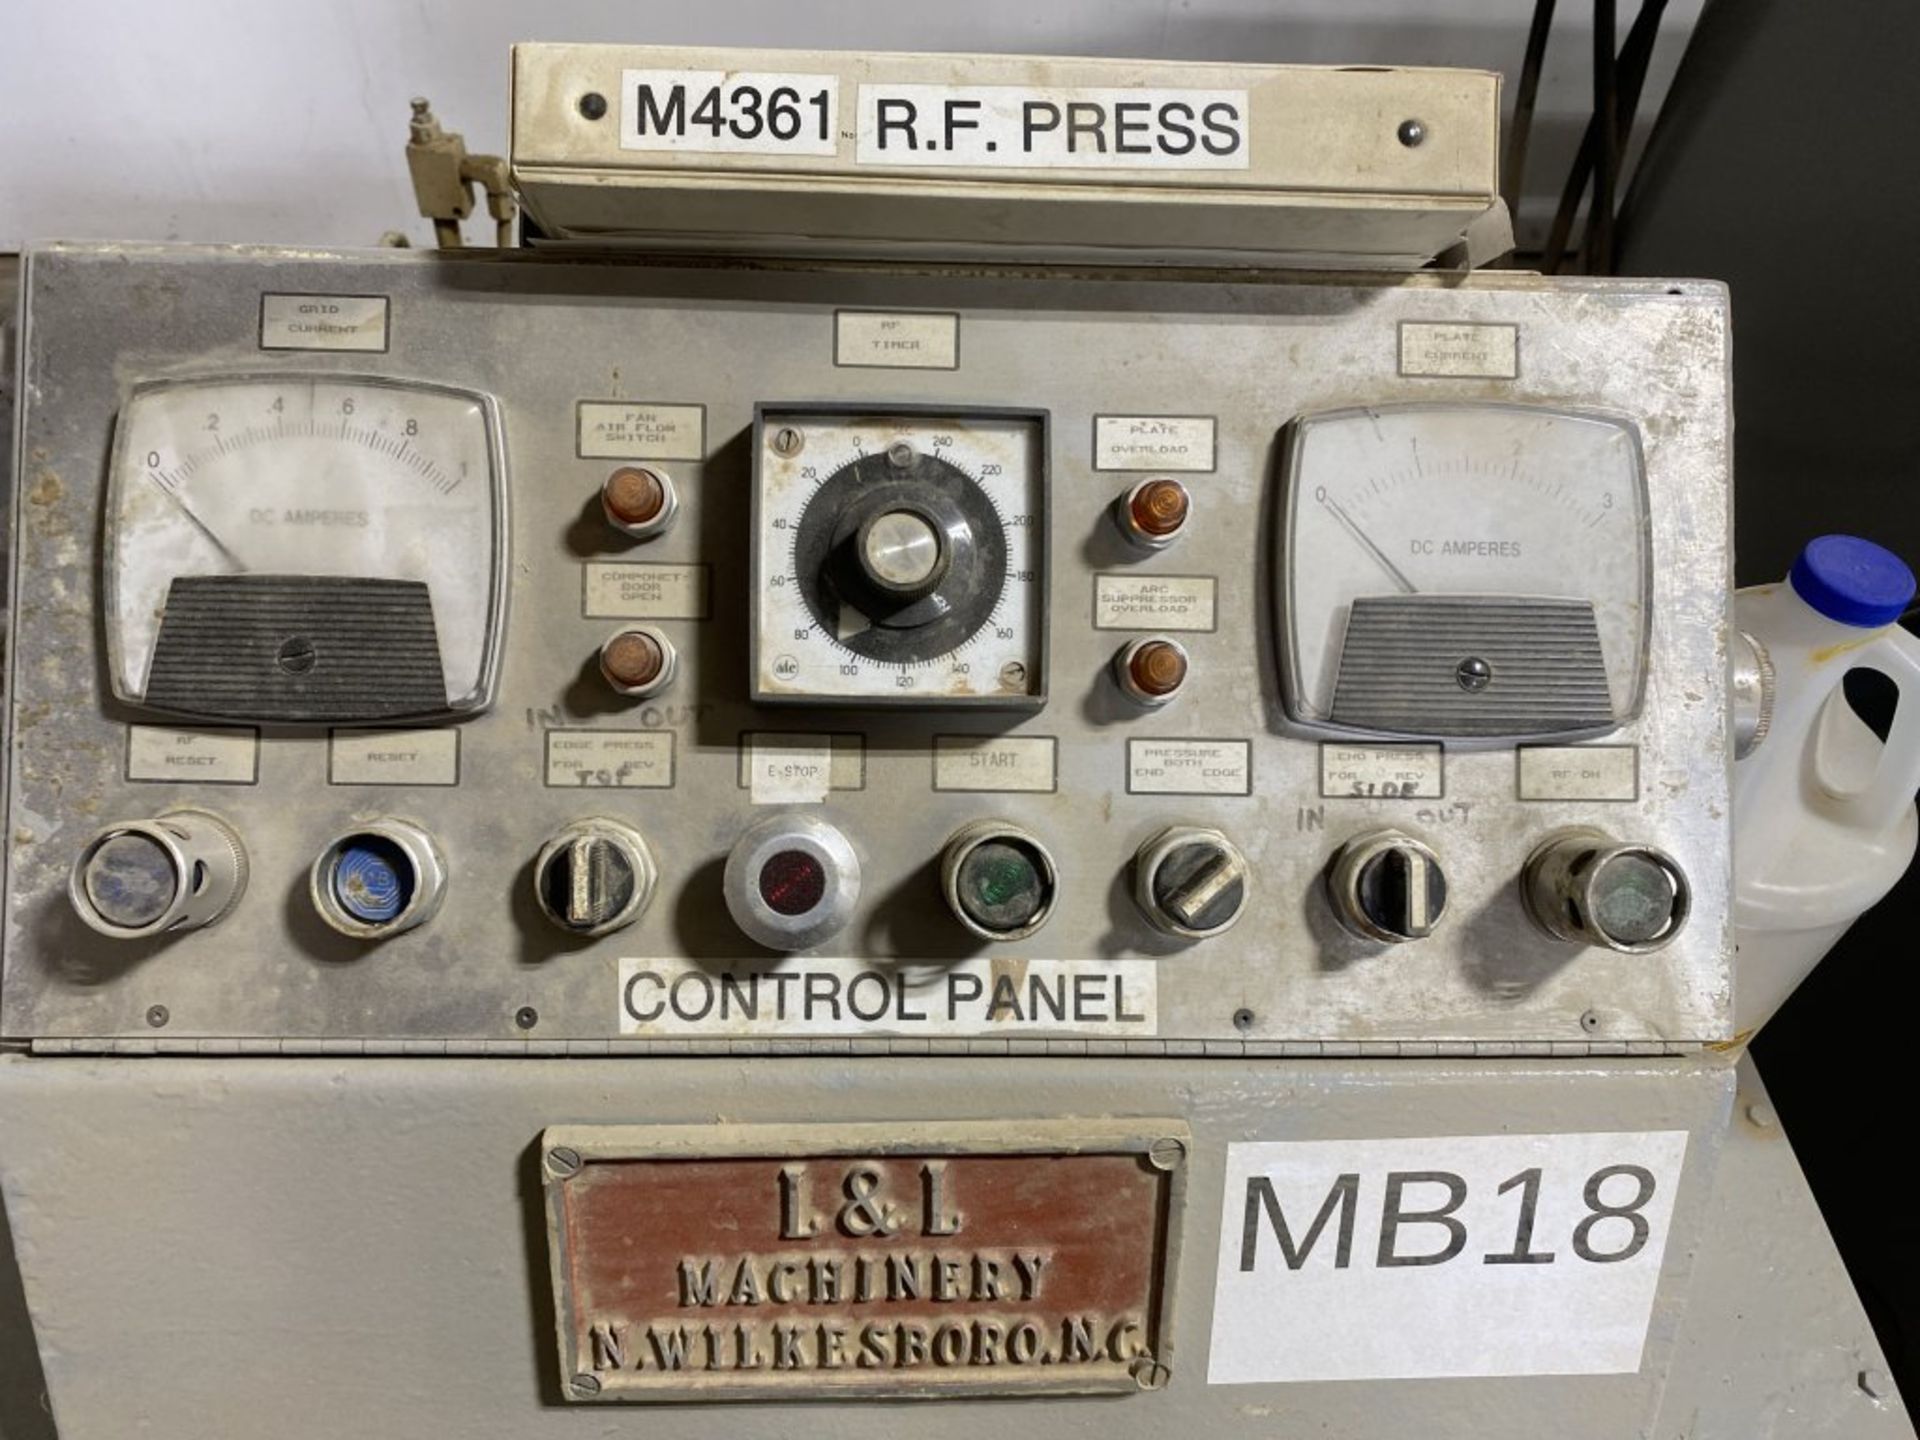 L&L MACHINERY DU-ALL M4361 RING PRESS, MODEL DA-80, 3-PHASE, 440V, S/N: 87-803 - Image 7 of 14